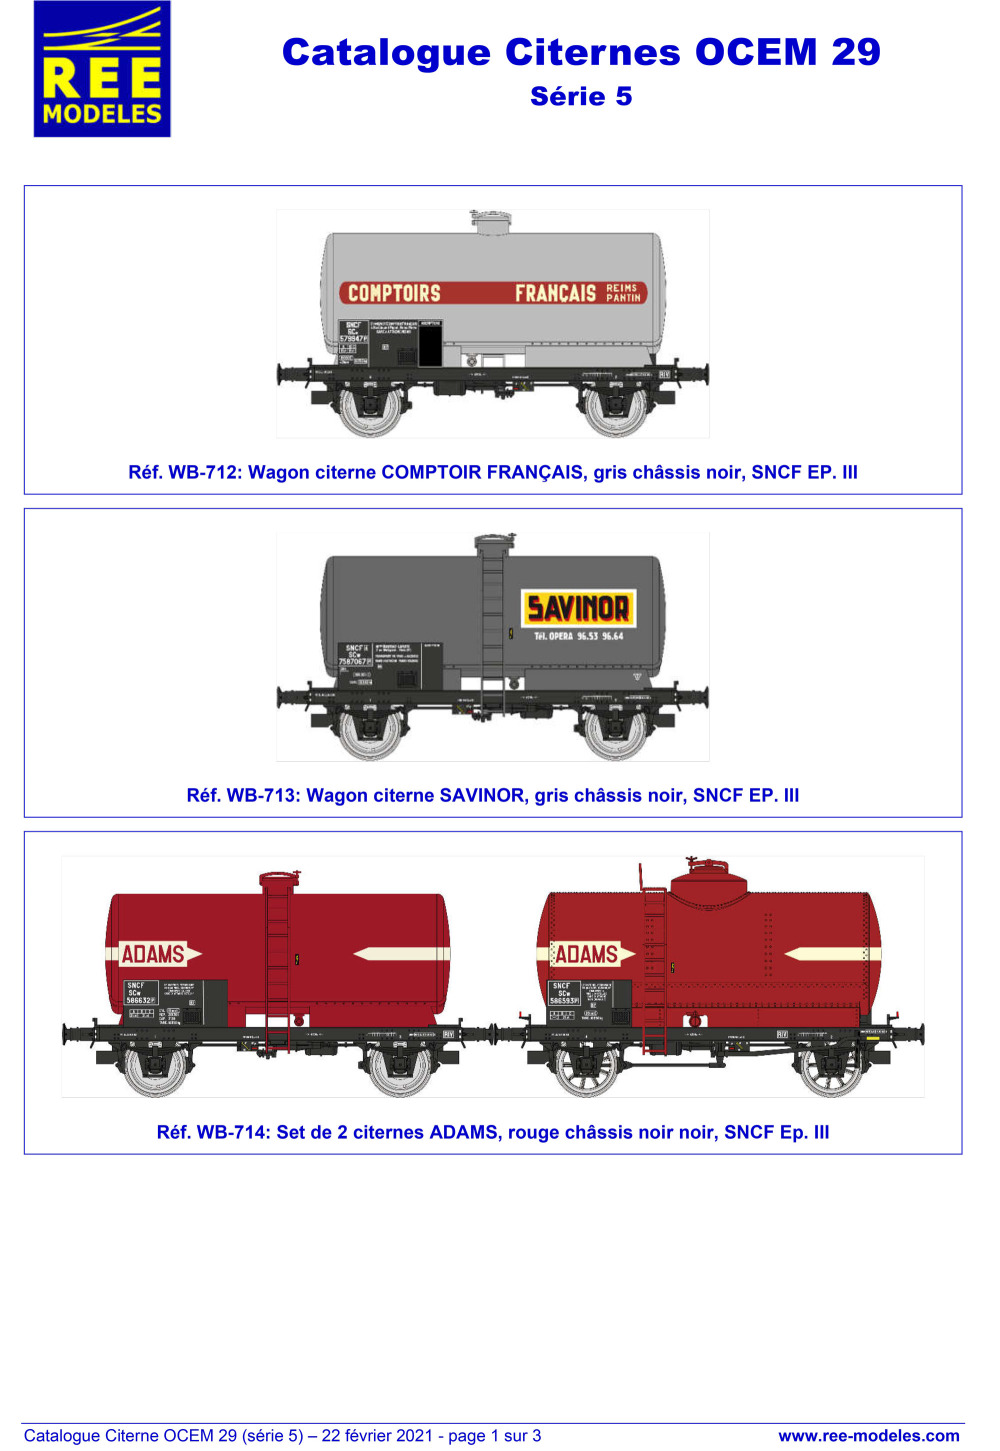 Rails Europ Express - SNCF - OCEM 29 tank wagons (5th series)